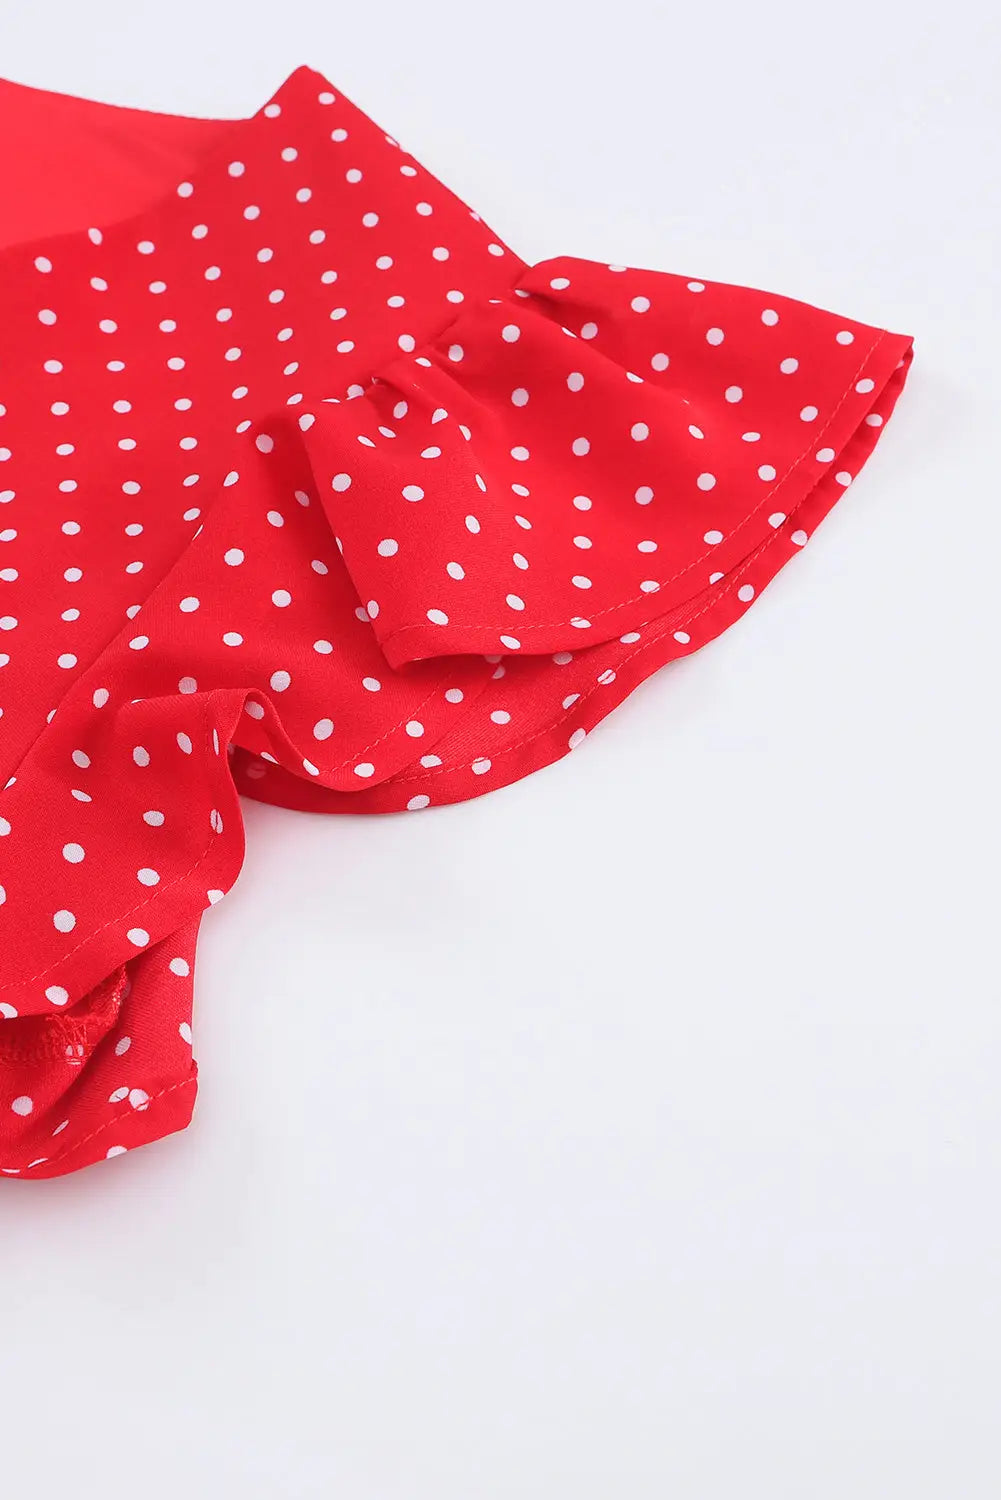 Red polka dot v neck ruffle sleeve dress - mini dresses